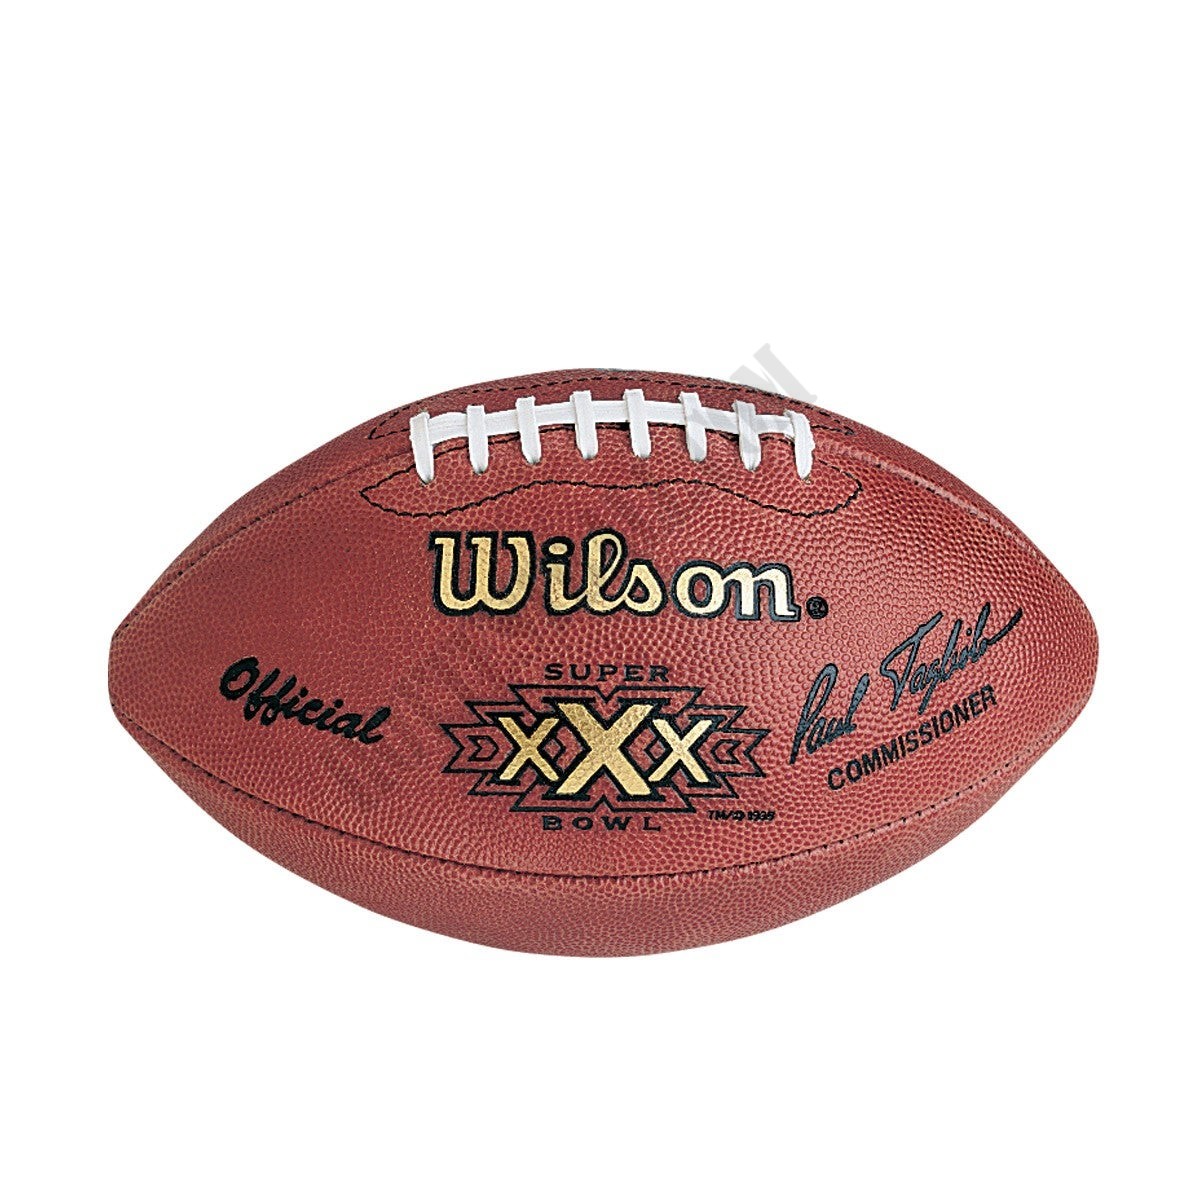 Super Bowl XXX Game Football - Dallas Cowboys ● Wilson Promotions - Super Bowl XXX Game Football - Dallas Cowboys ● Wilson Promotions